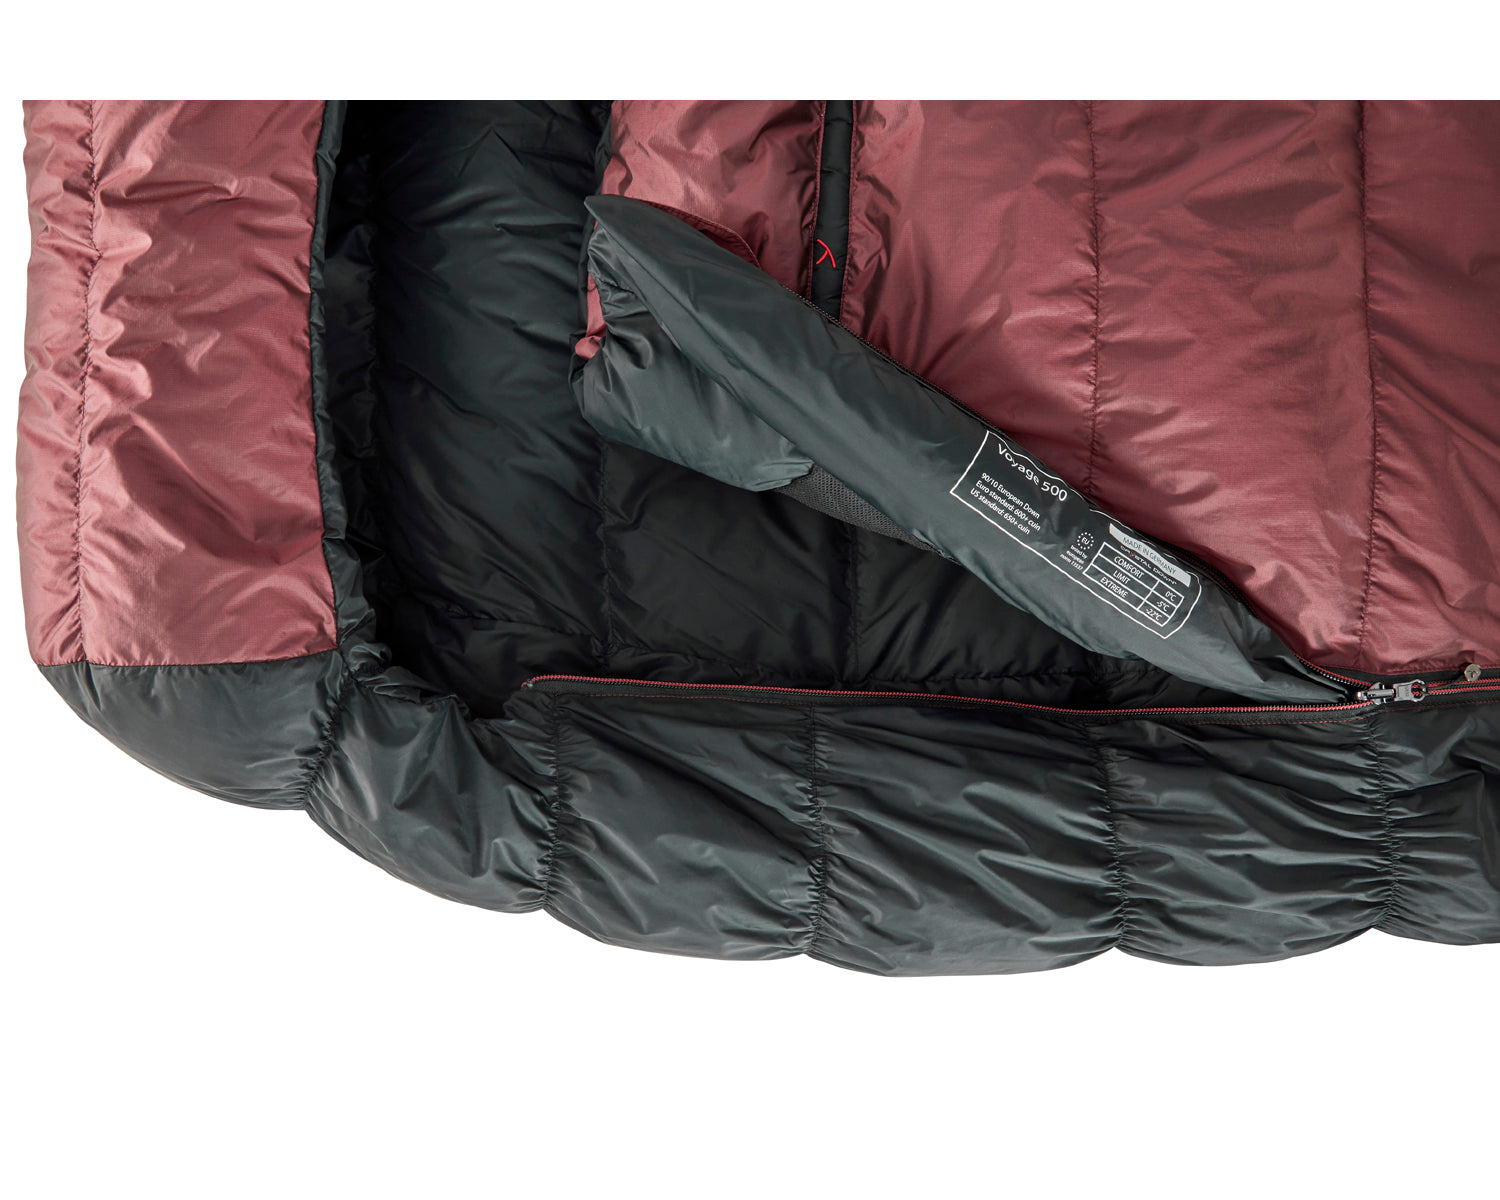 Voyage 500 sleeping bag (RIGHT ZIP) - Ribbon red / Black